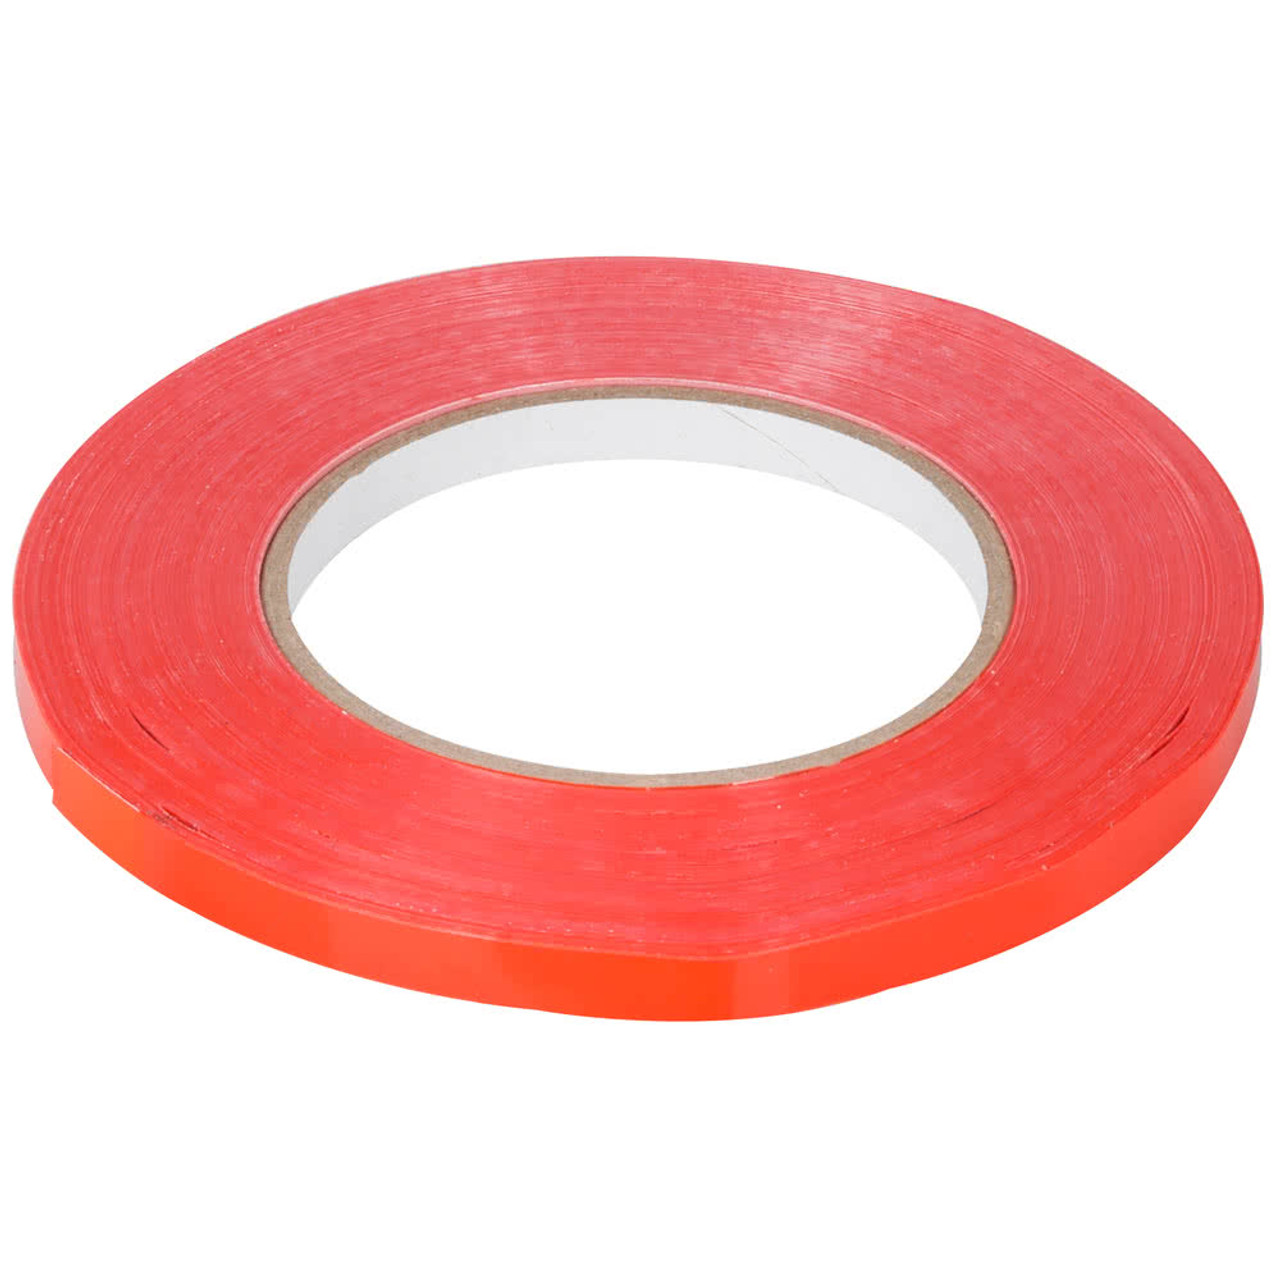 General Purpose Red Poly Bag Sealer Tape 3/8" x 180 Yards (9mm x 165m)